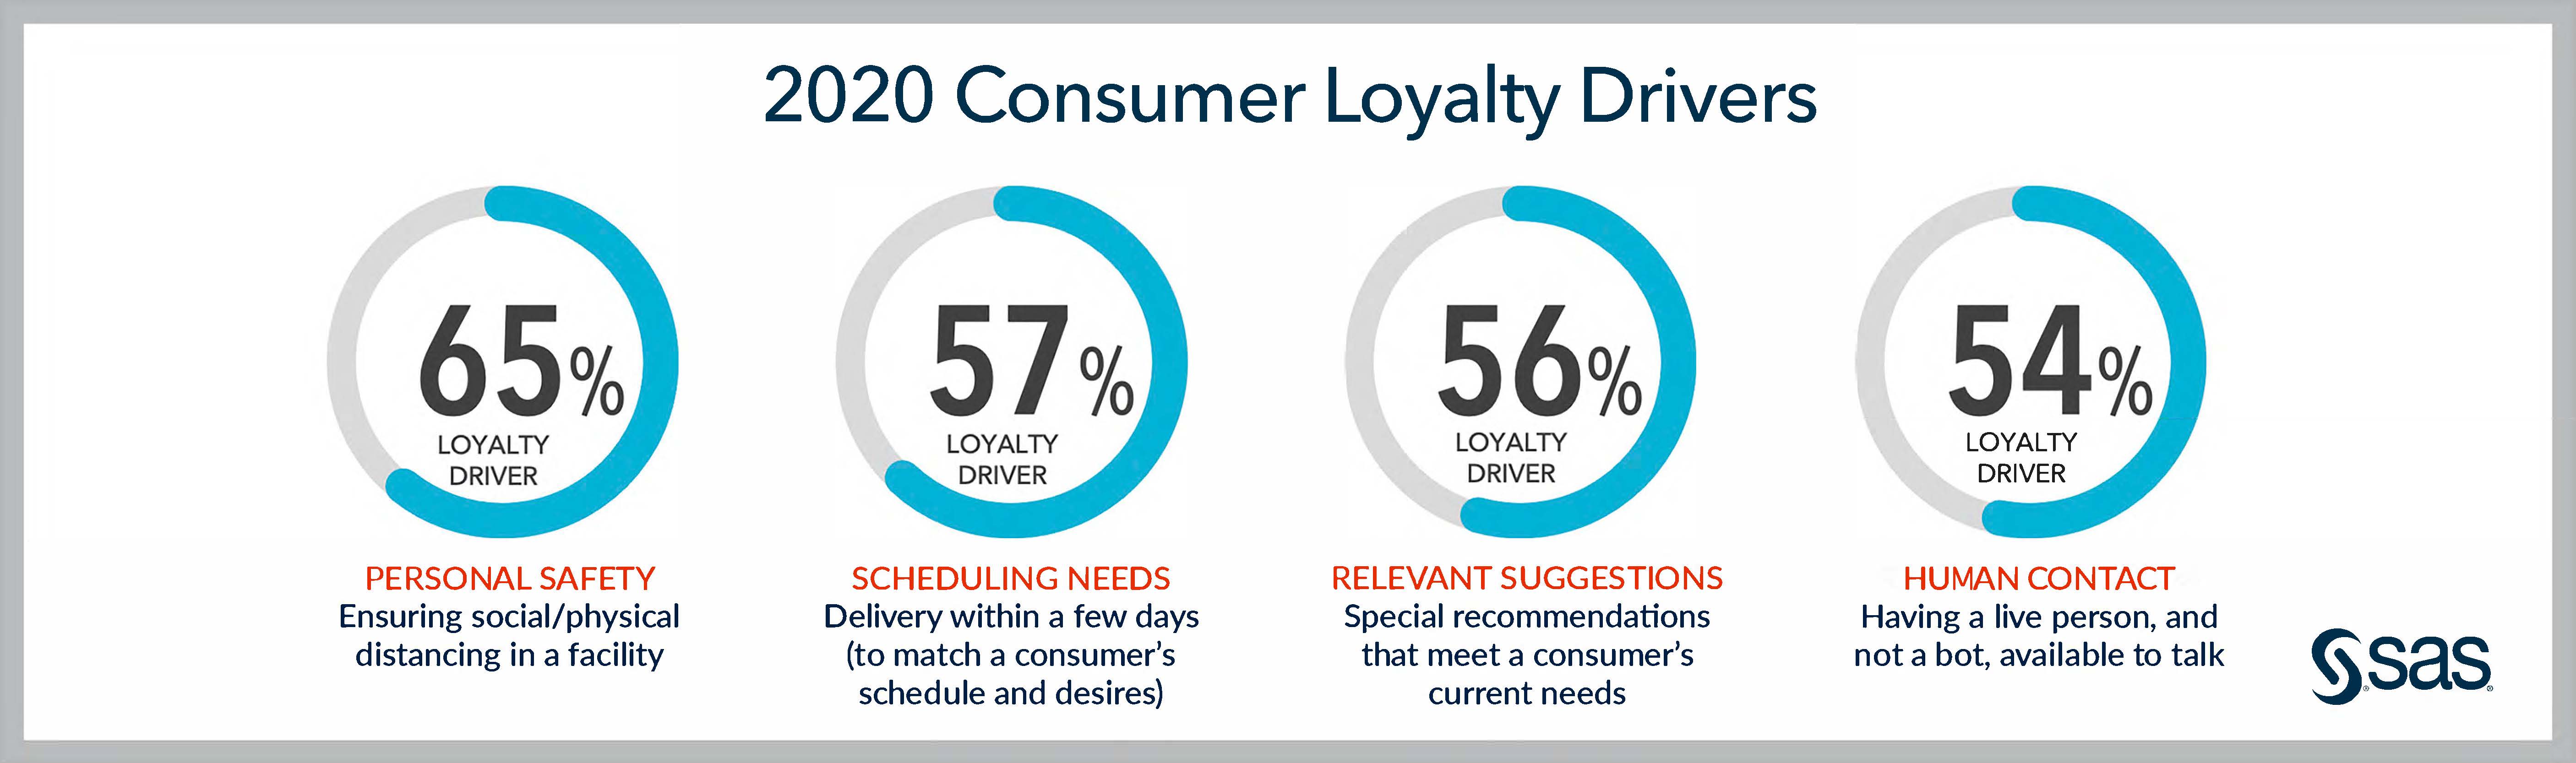 2020-consumer-loyalty-drivers